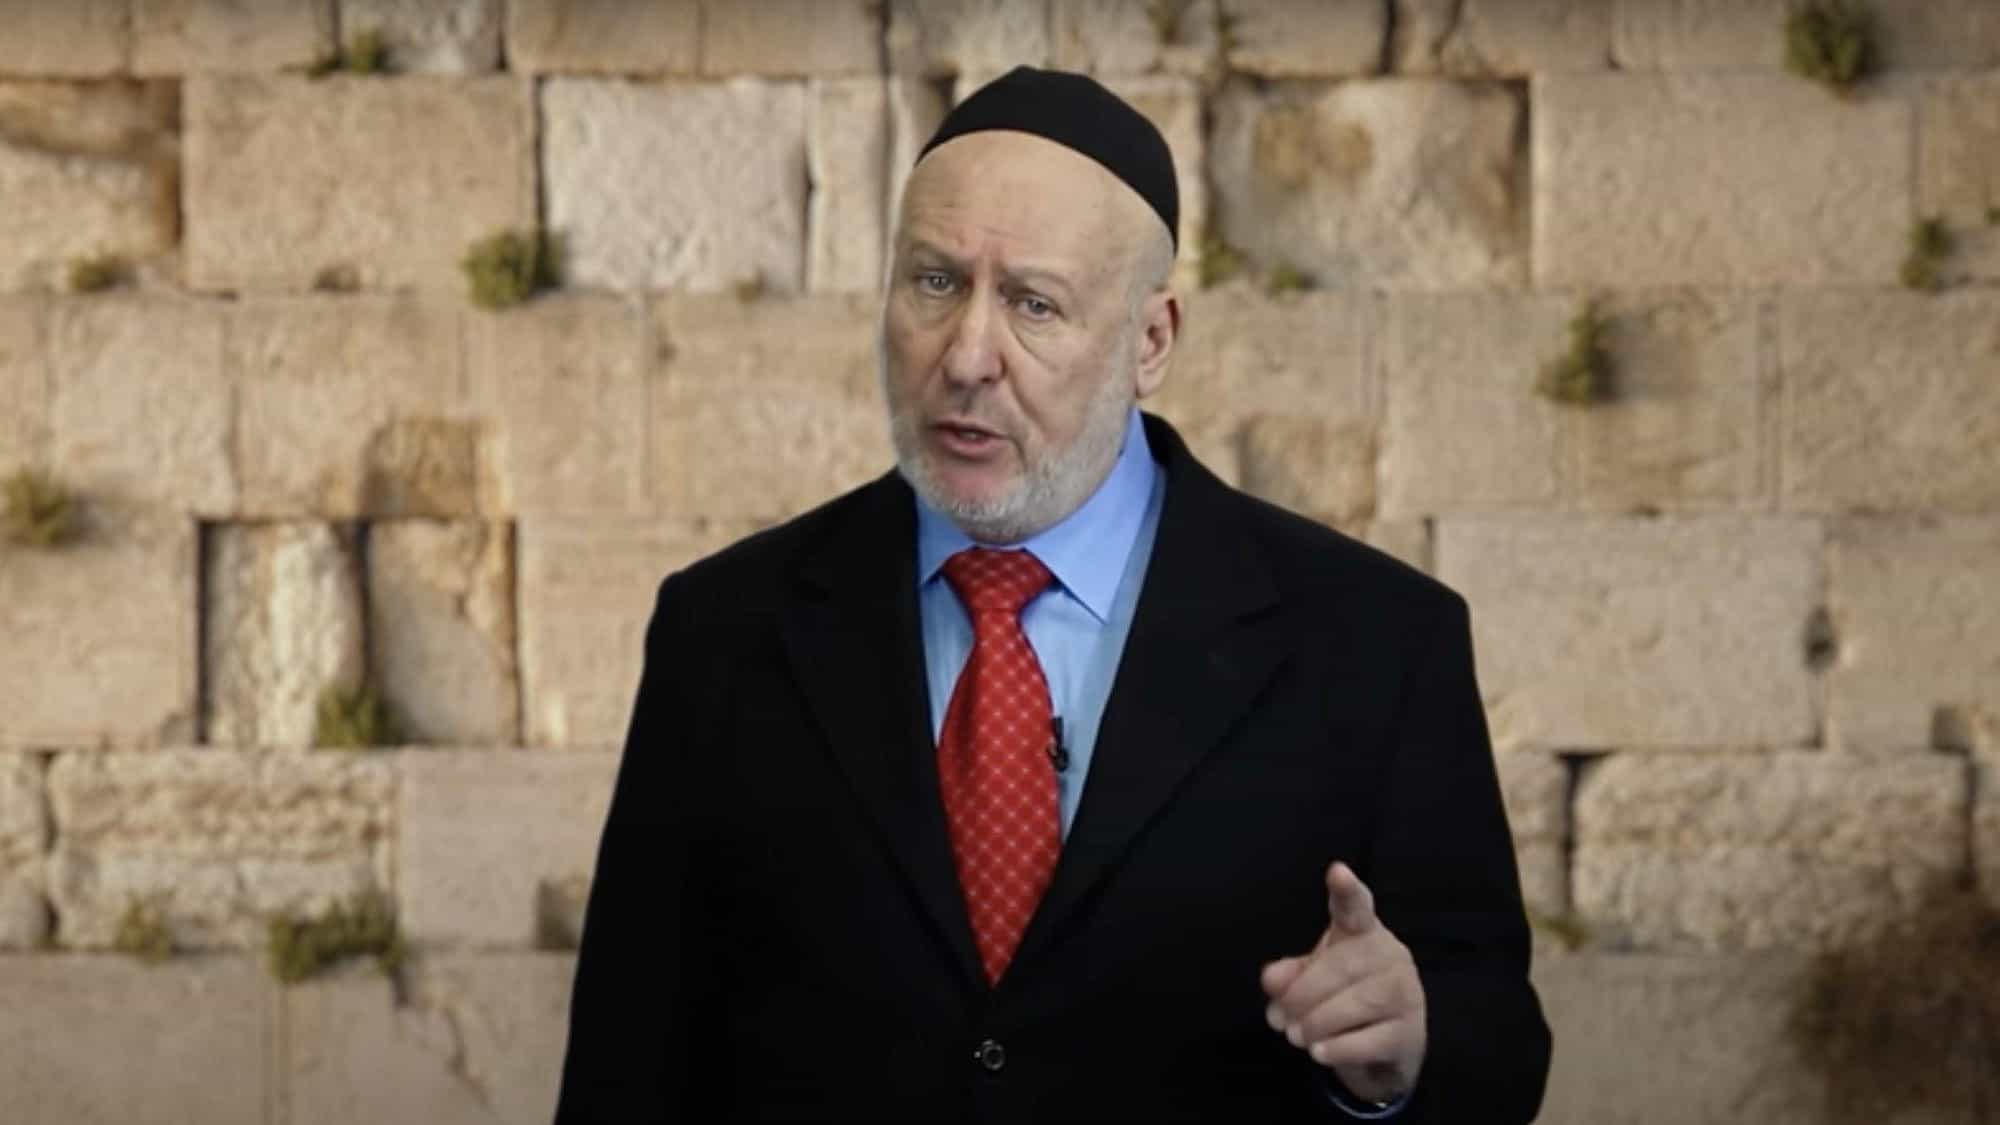 Rabbi Daniel Lapin. Source: YouTube/Rabbi Daniel Lapin.